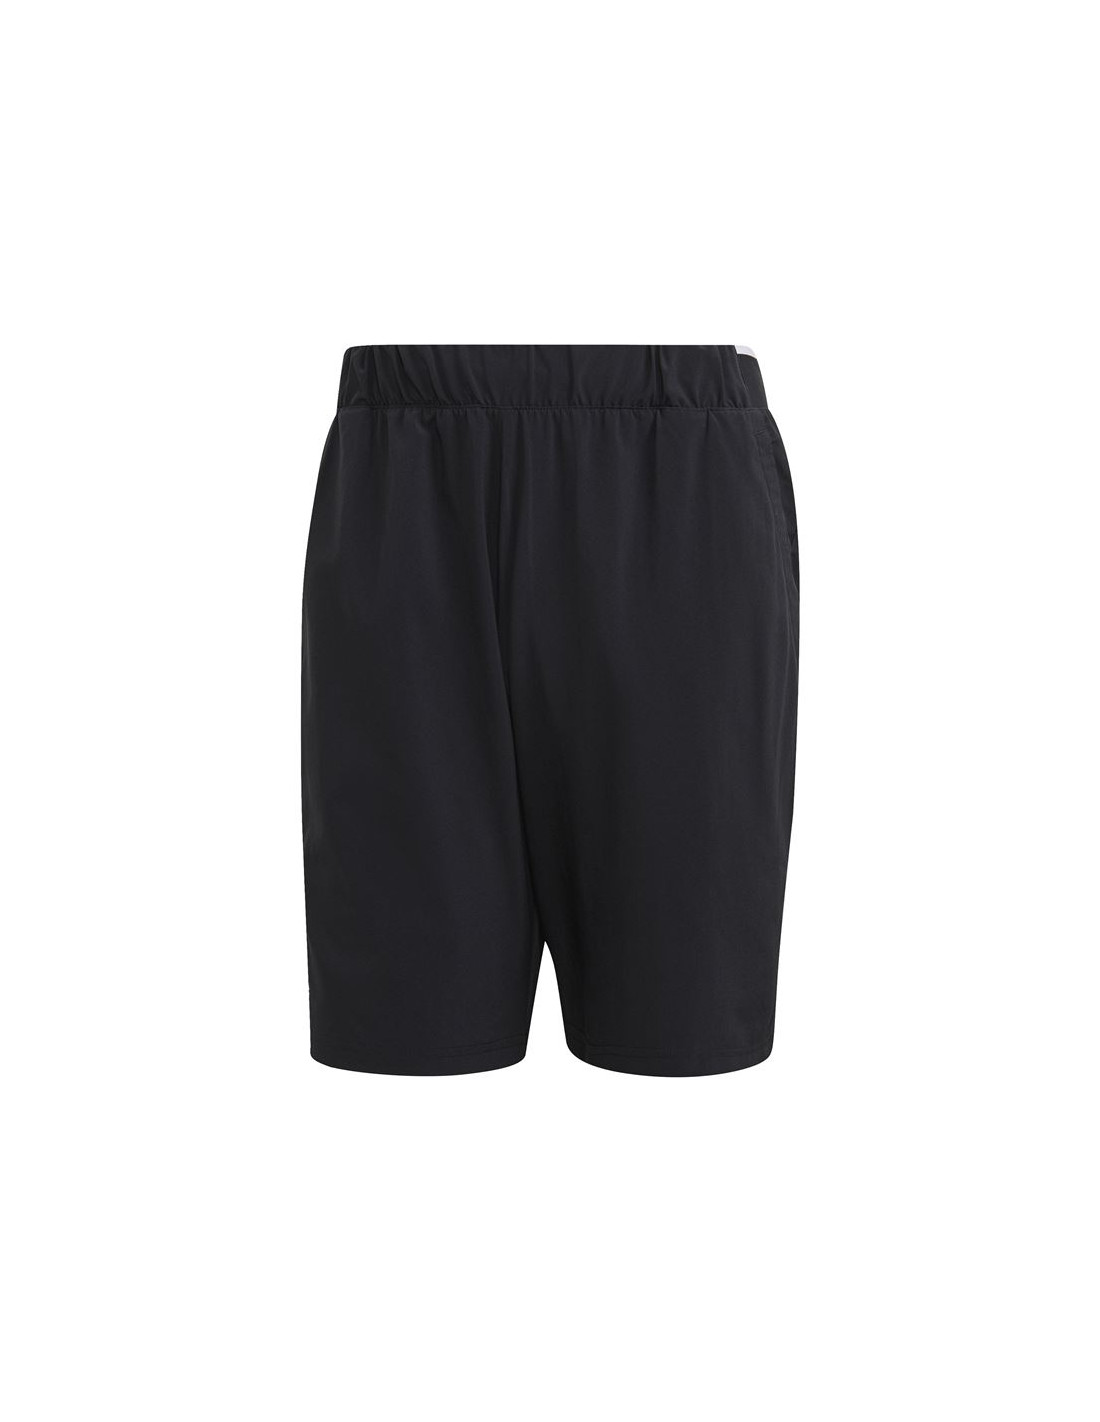 Pantalones cortos adidas club stretch-woven tennis m black/white